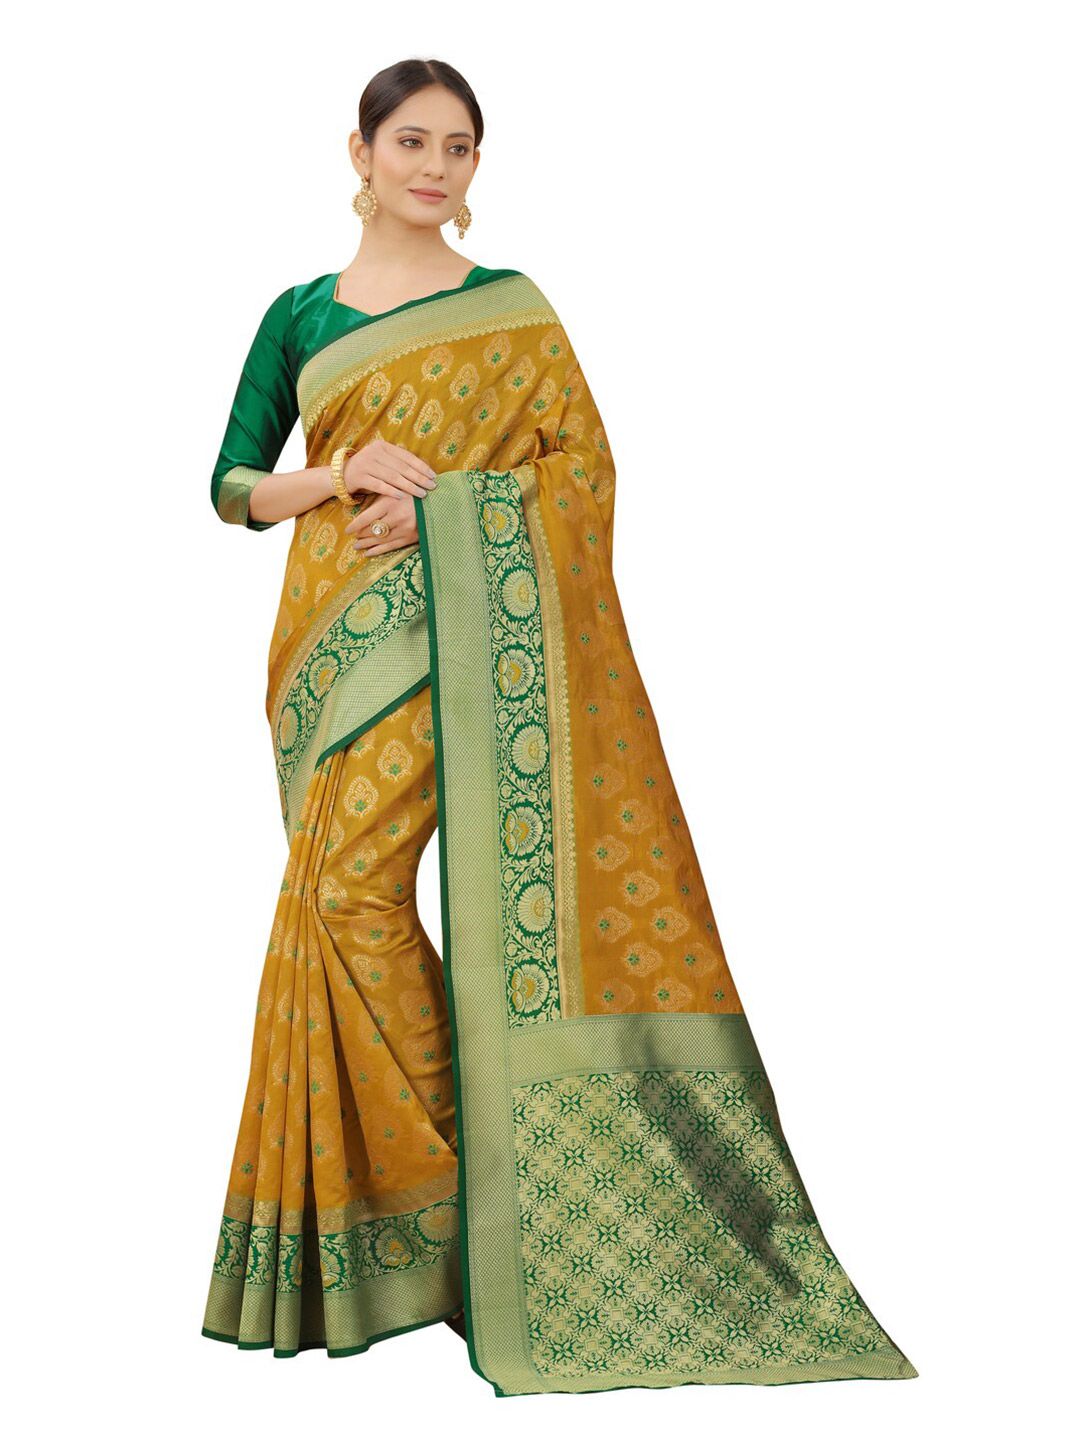 MOKSHA DESIGNS Gold-Toned & Green Ethnic Motifs Zari Pure Silk Kanjeevaram Saree Price in India